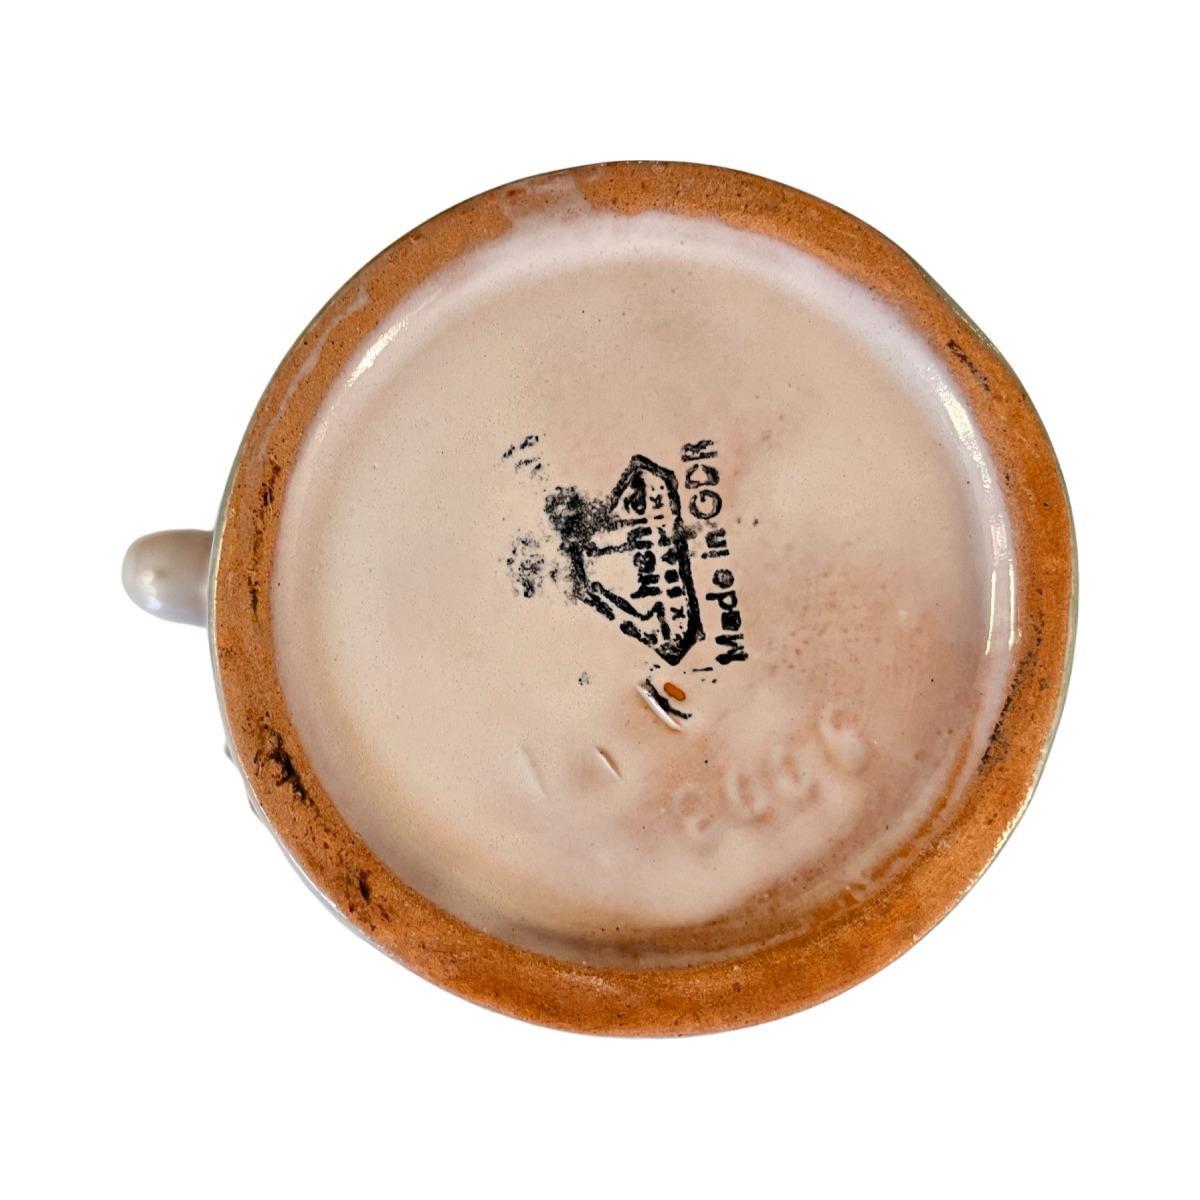 Ceramiczny dzbanek z uchem, Strehla Keramik, Niemcy, lata 70. nr. 7